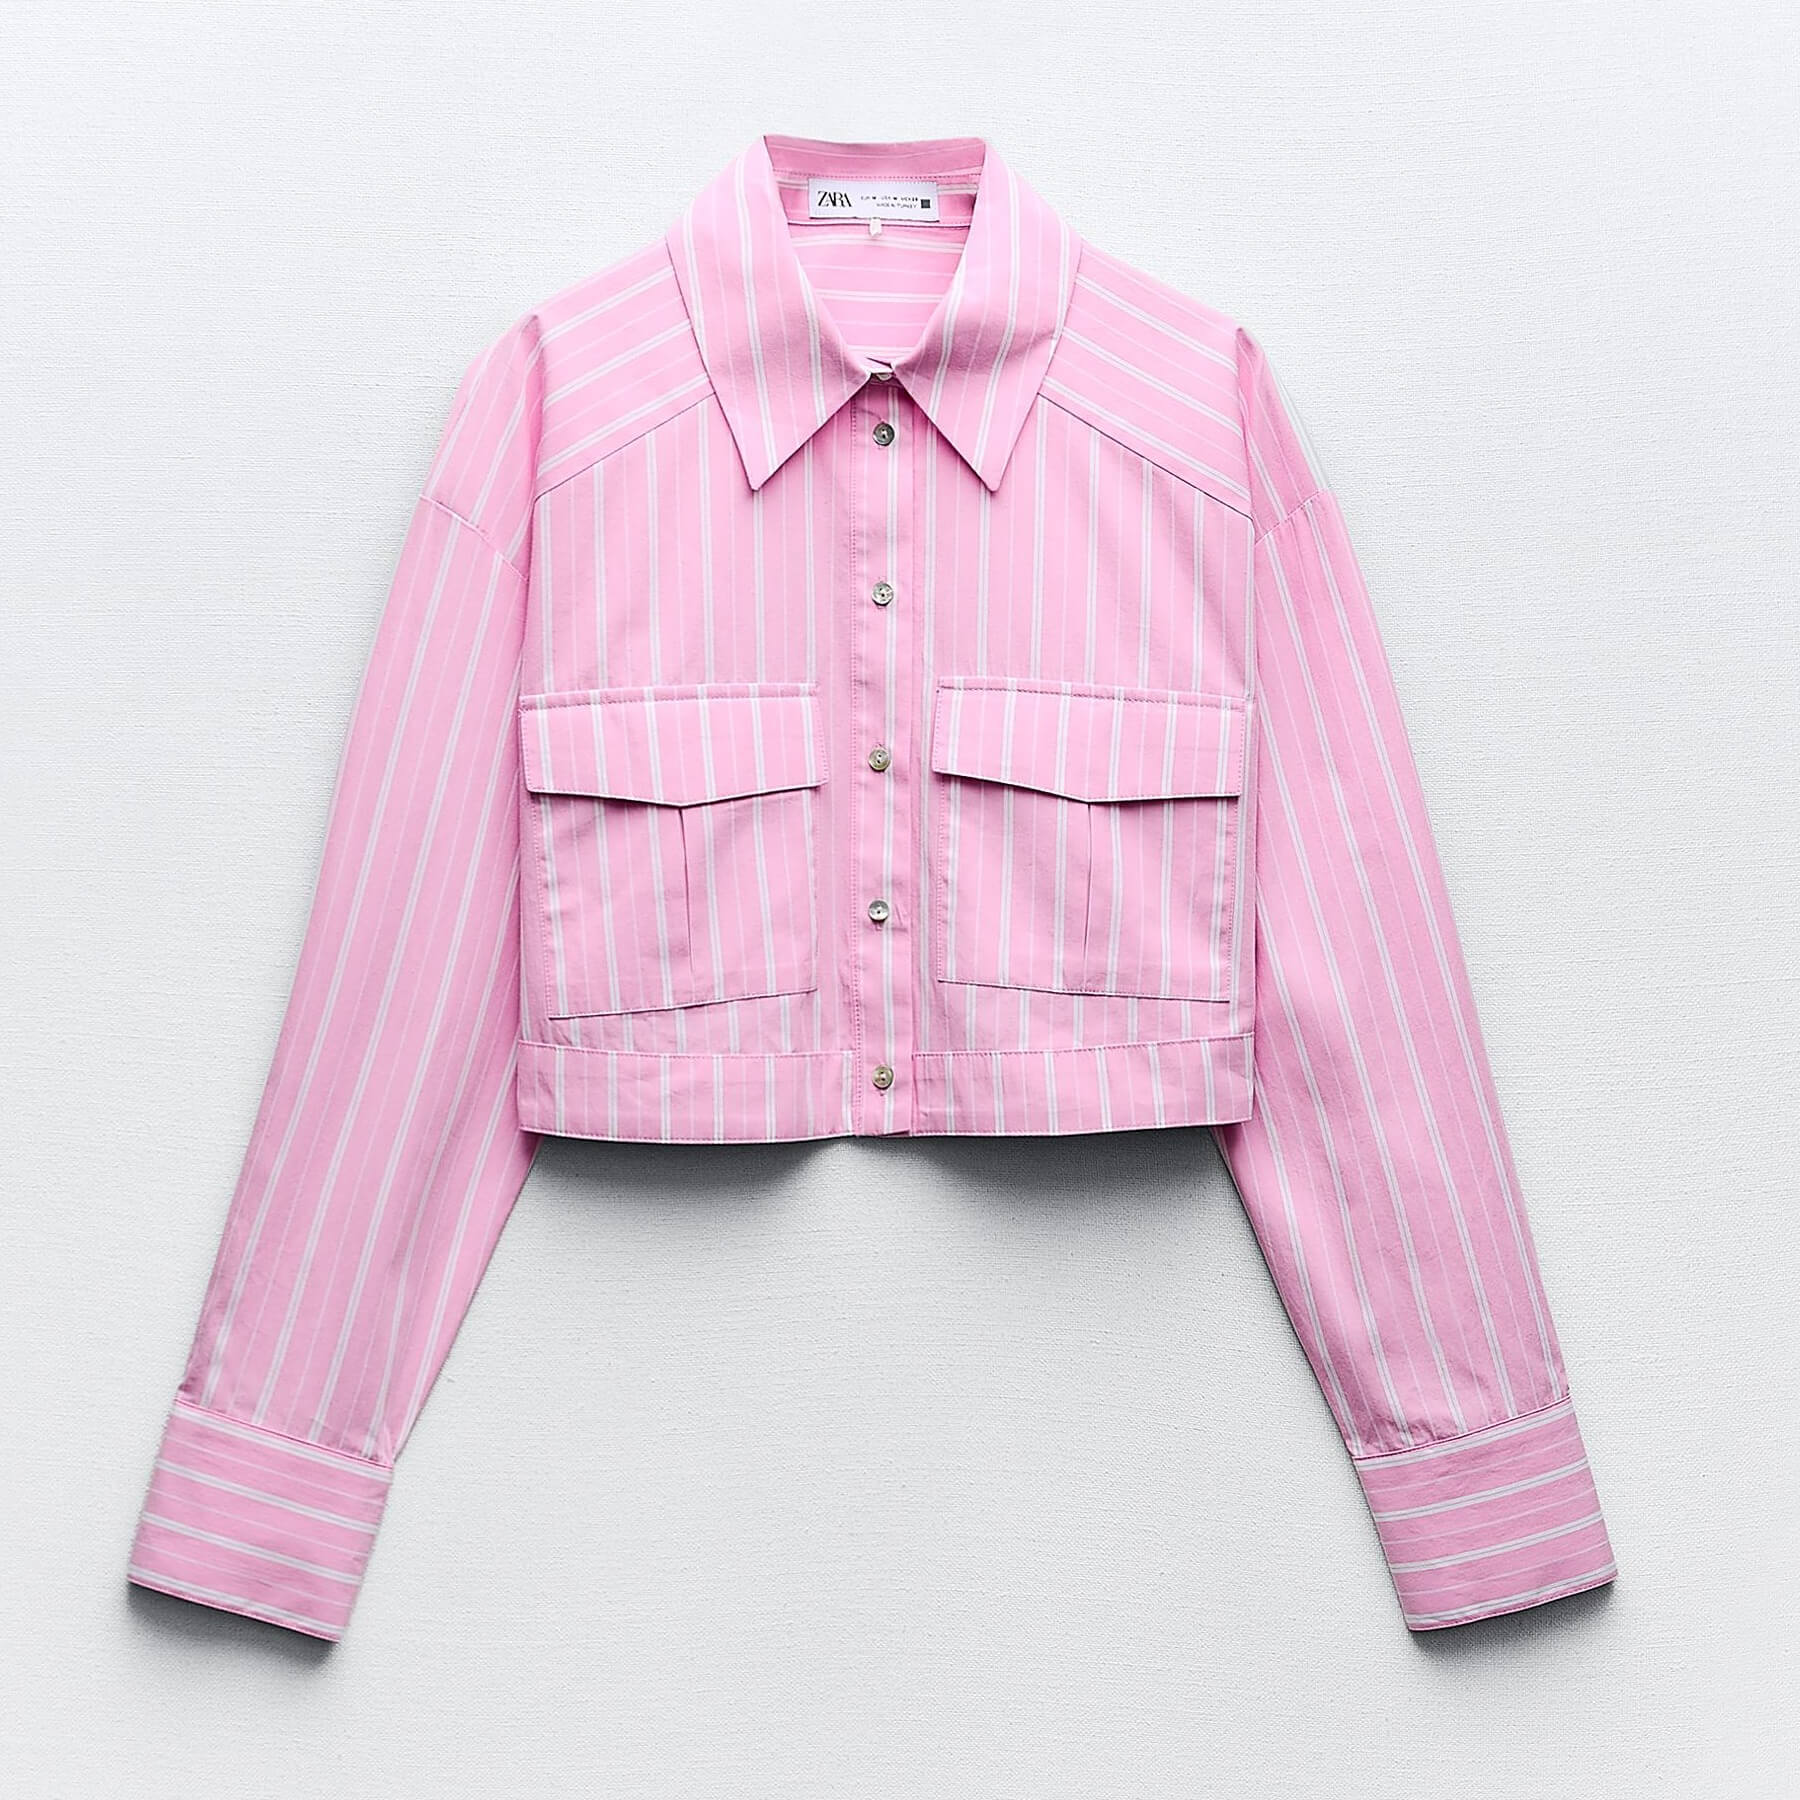 Рубашка Zara Cropped Striped, розовый/белый рубашка zara striped shirt розовый белый